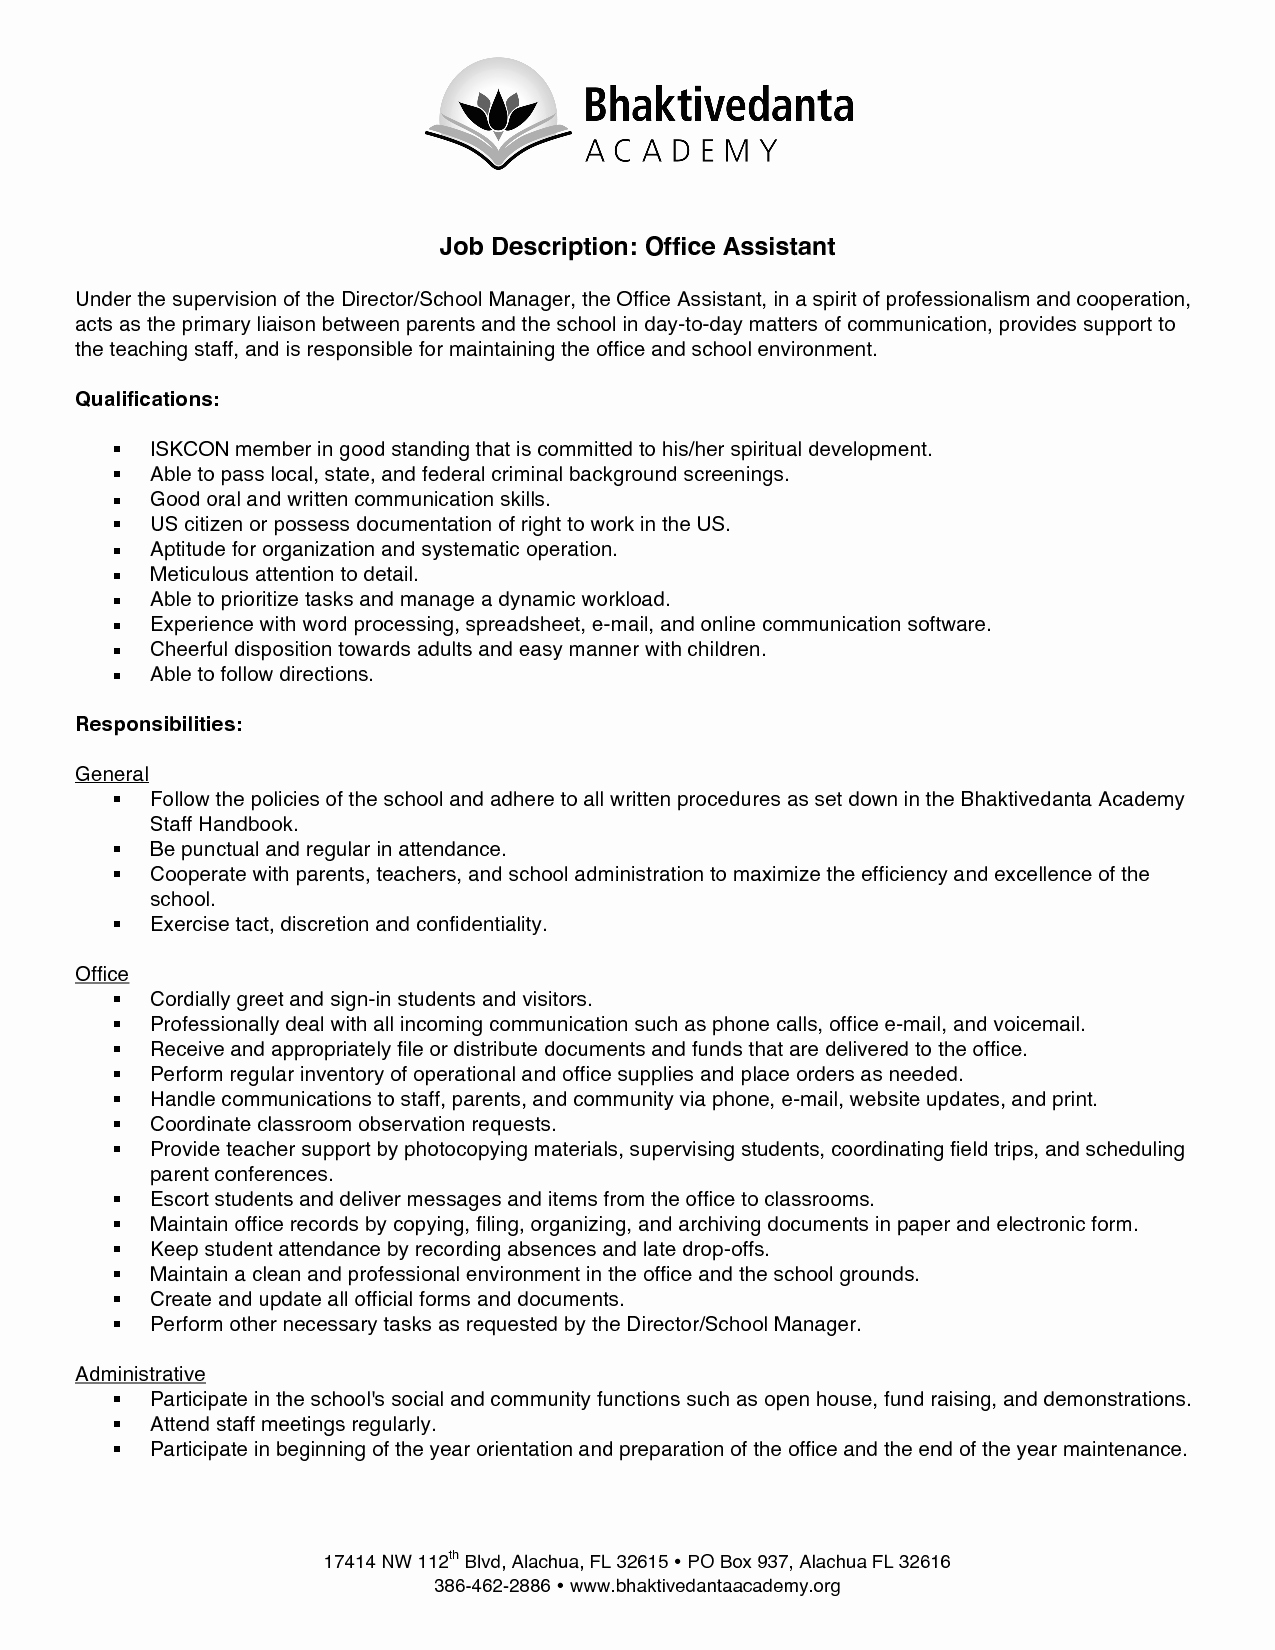 Fice assistant Job Description Resume 2016